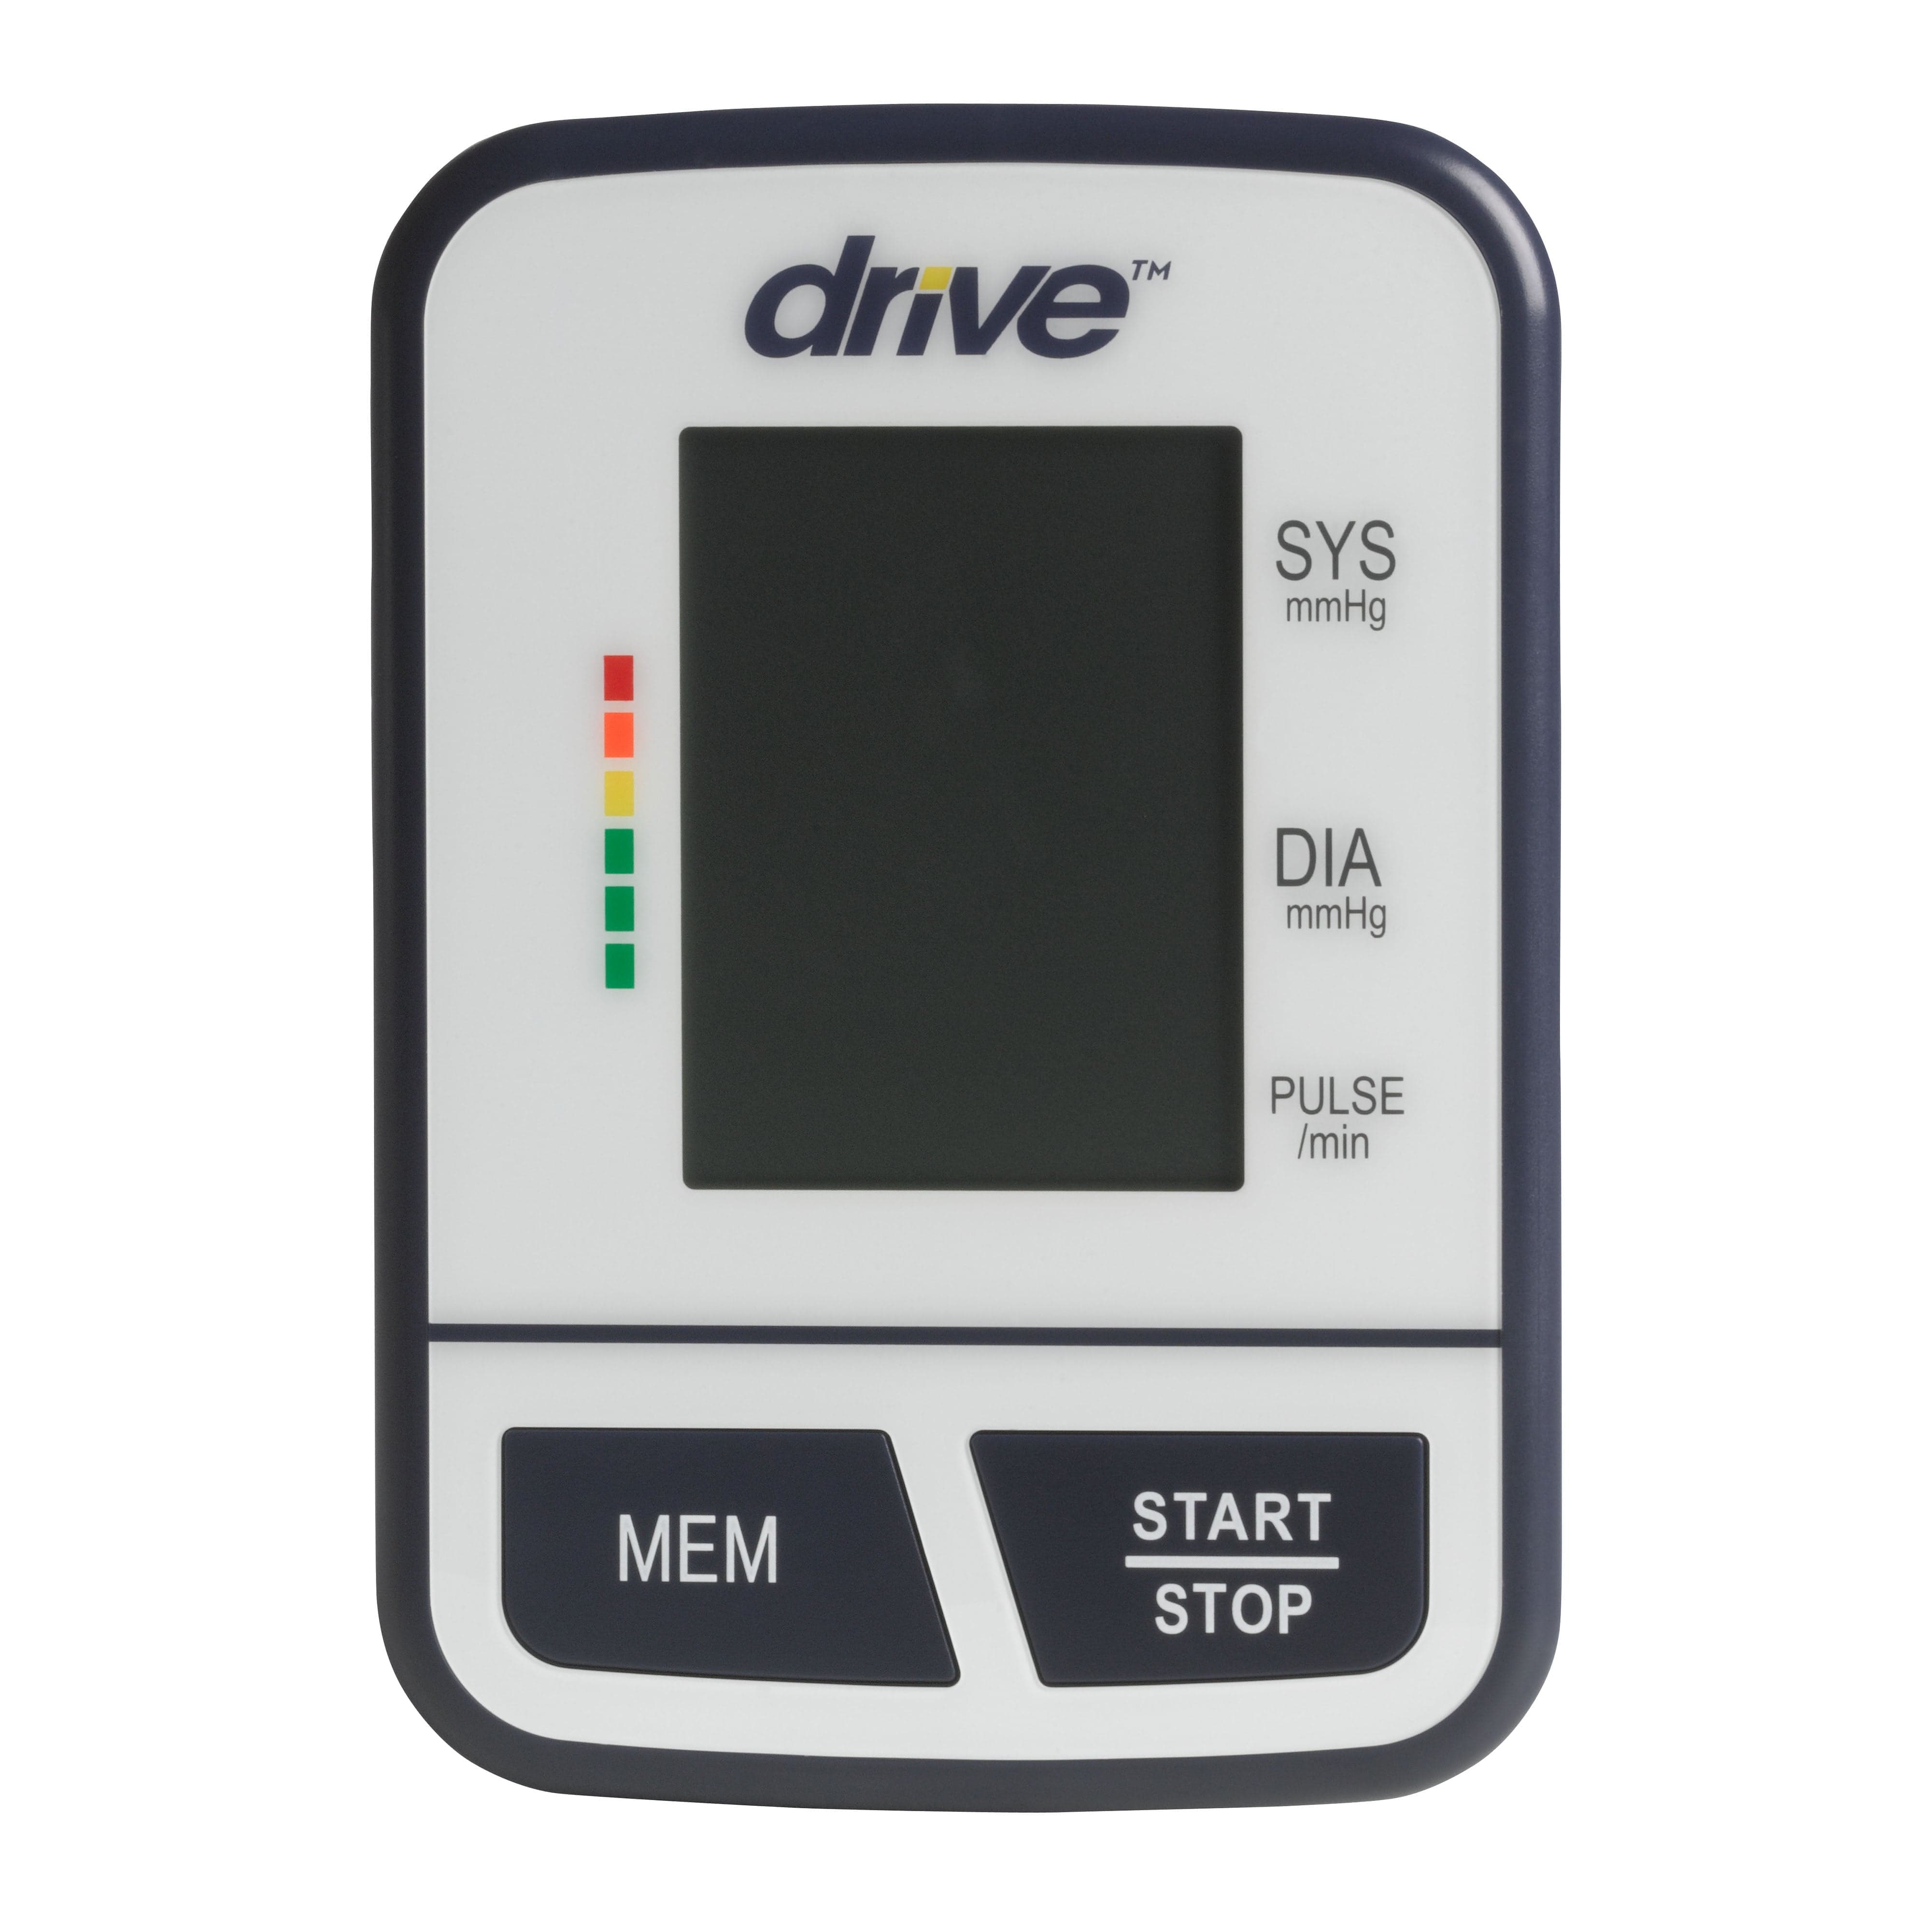 Drive Medical Drive Medical Economy Blood Pressure Monitor, Upper Arm bp3600